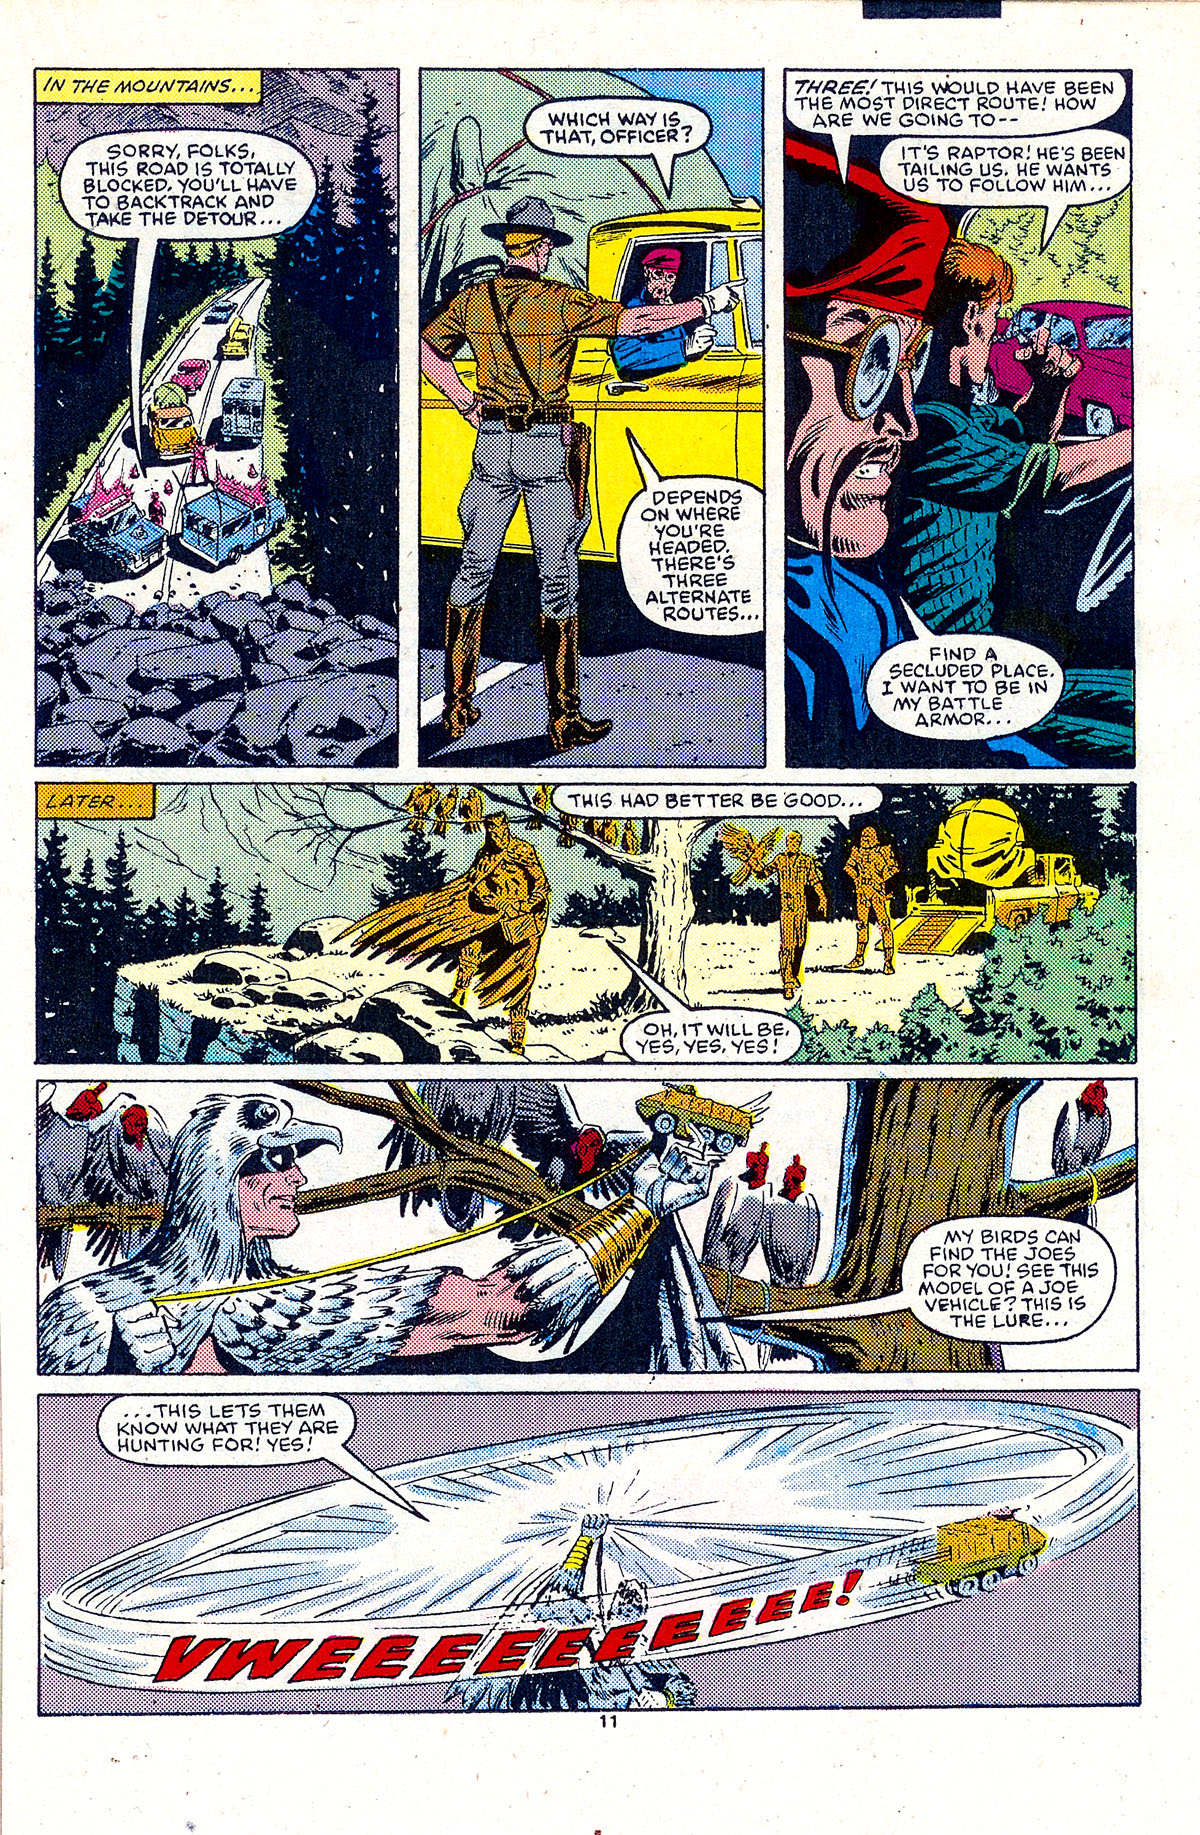 G.I. Joe: A Real American Hero 59 Page 11